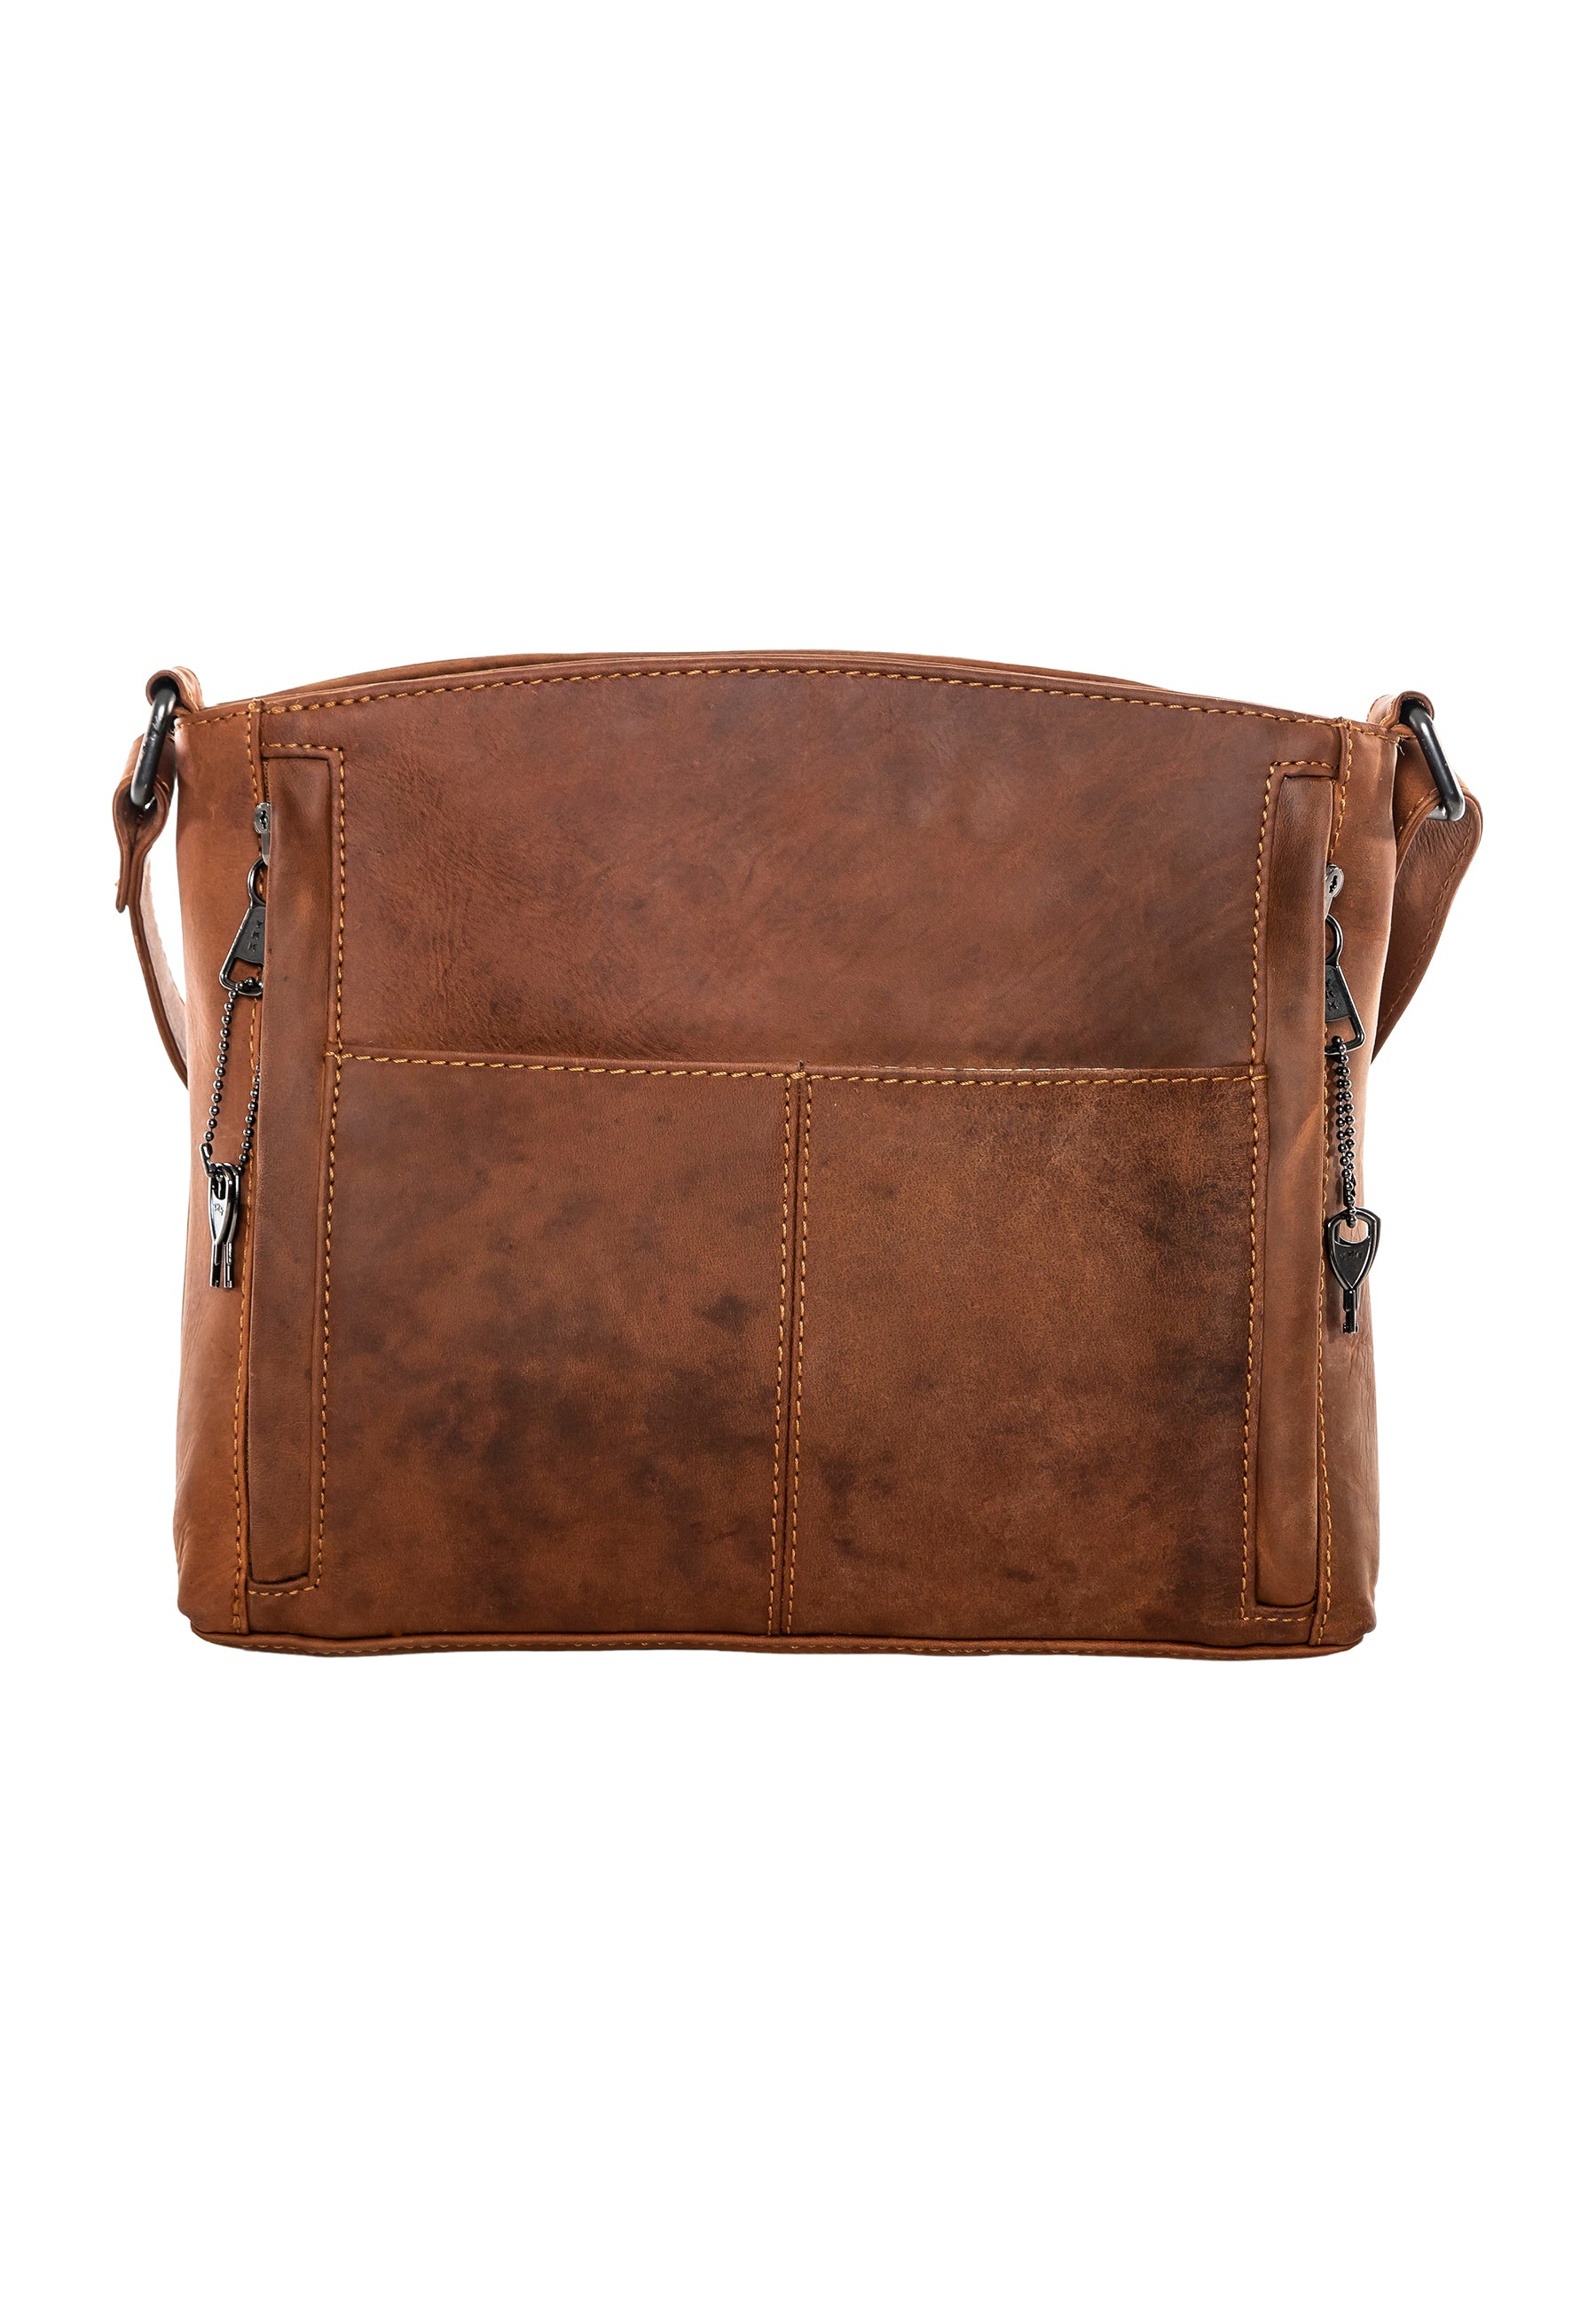 Delaney - Leather Crossbody Concealed Carry Purse - Gun Handbags